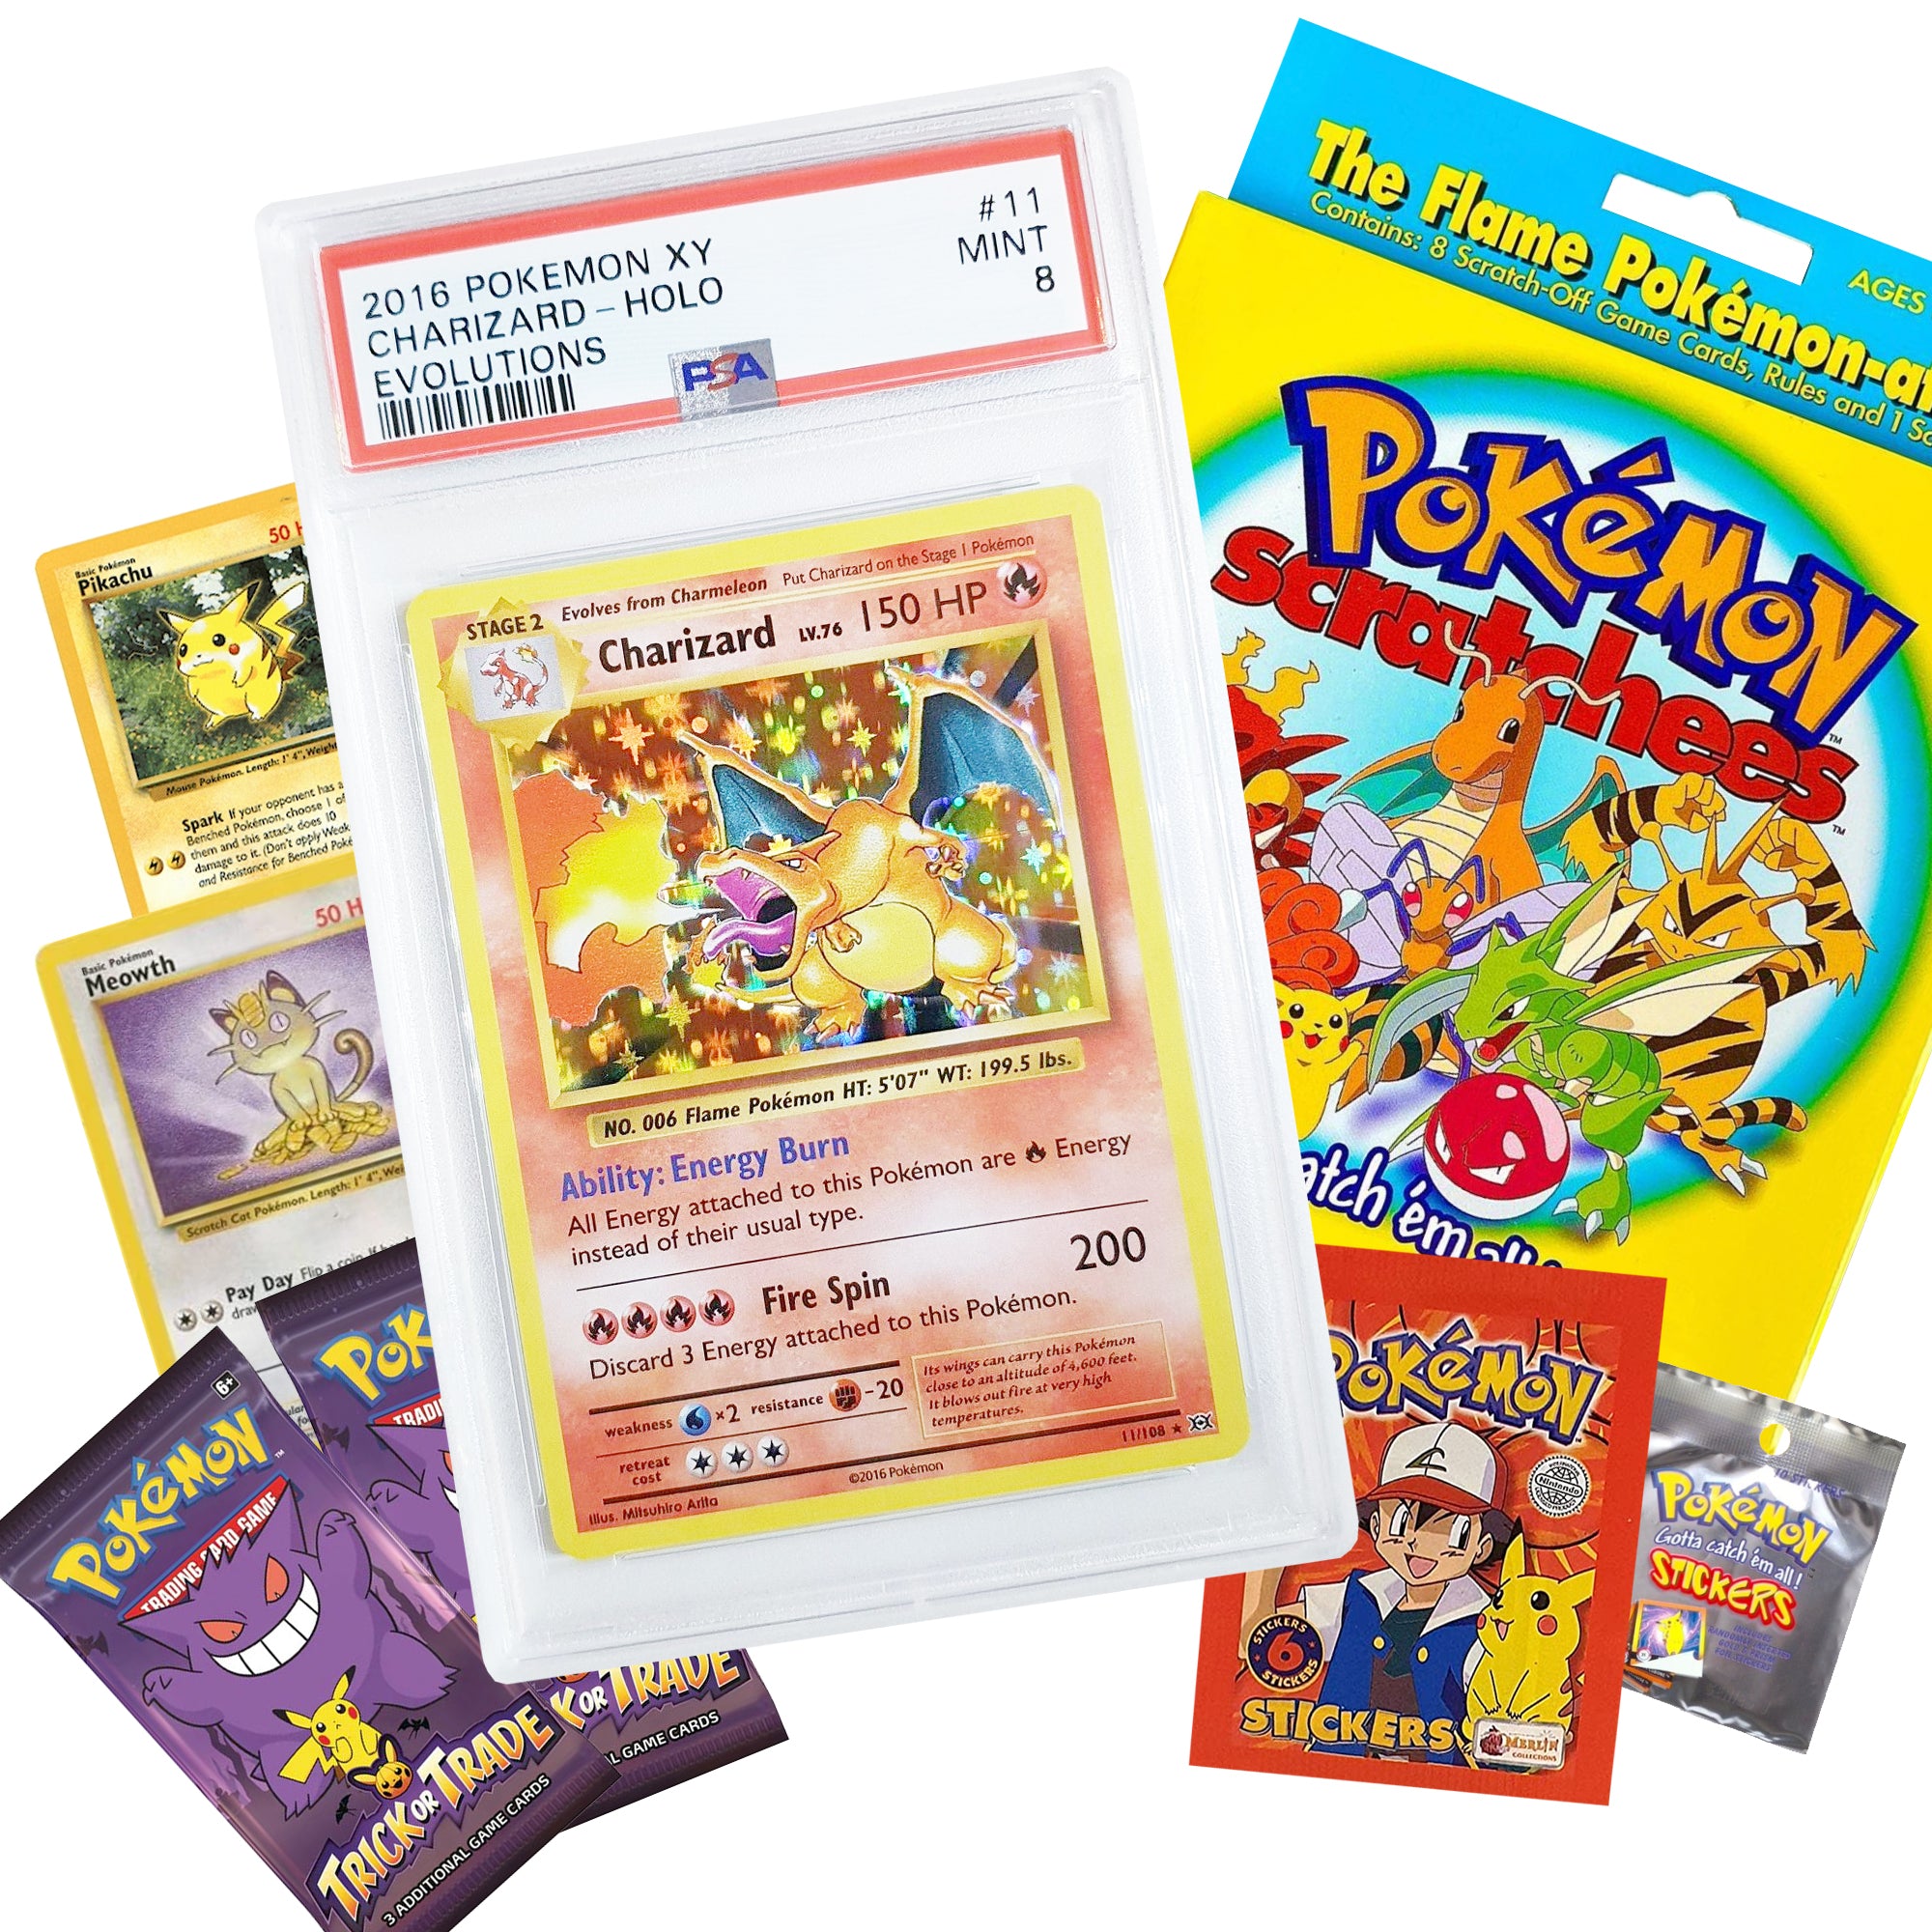 47 Mew Promo Pokemon Card Nr Mint - Mint – PokemonCardShop